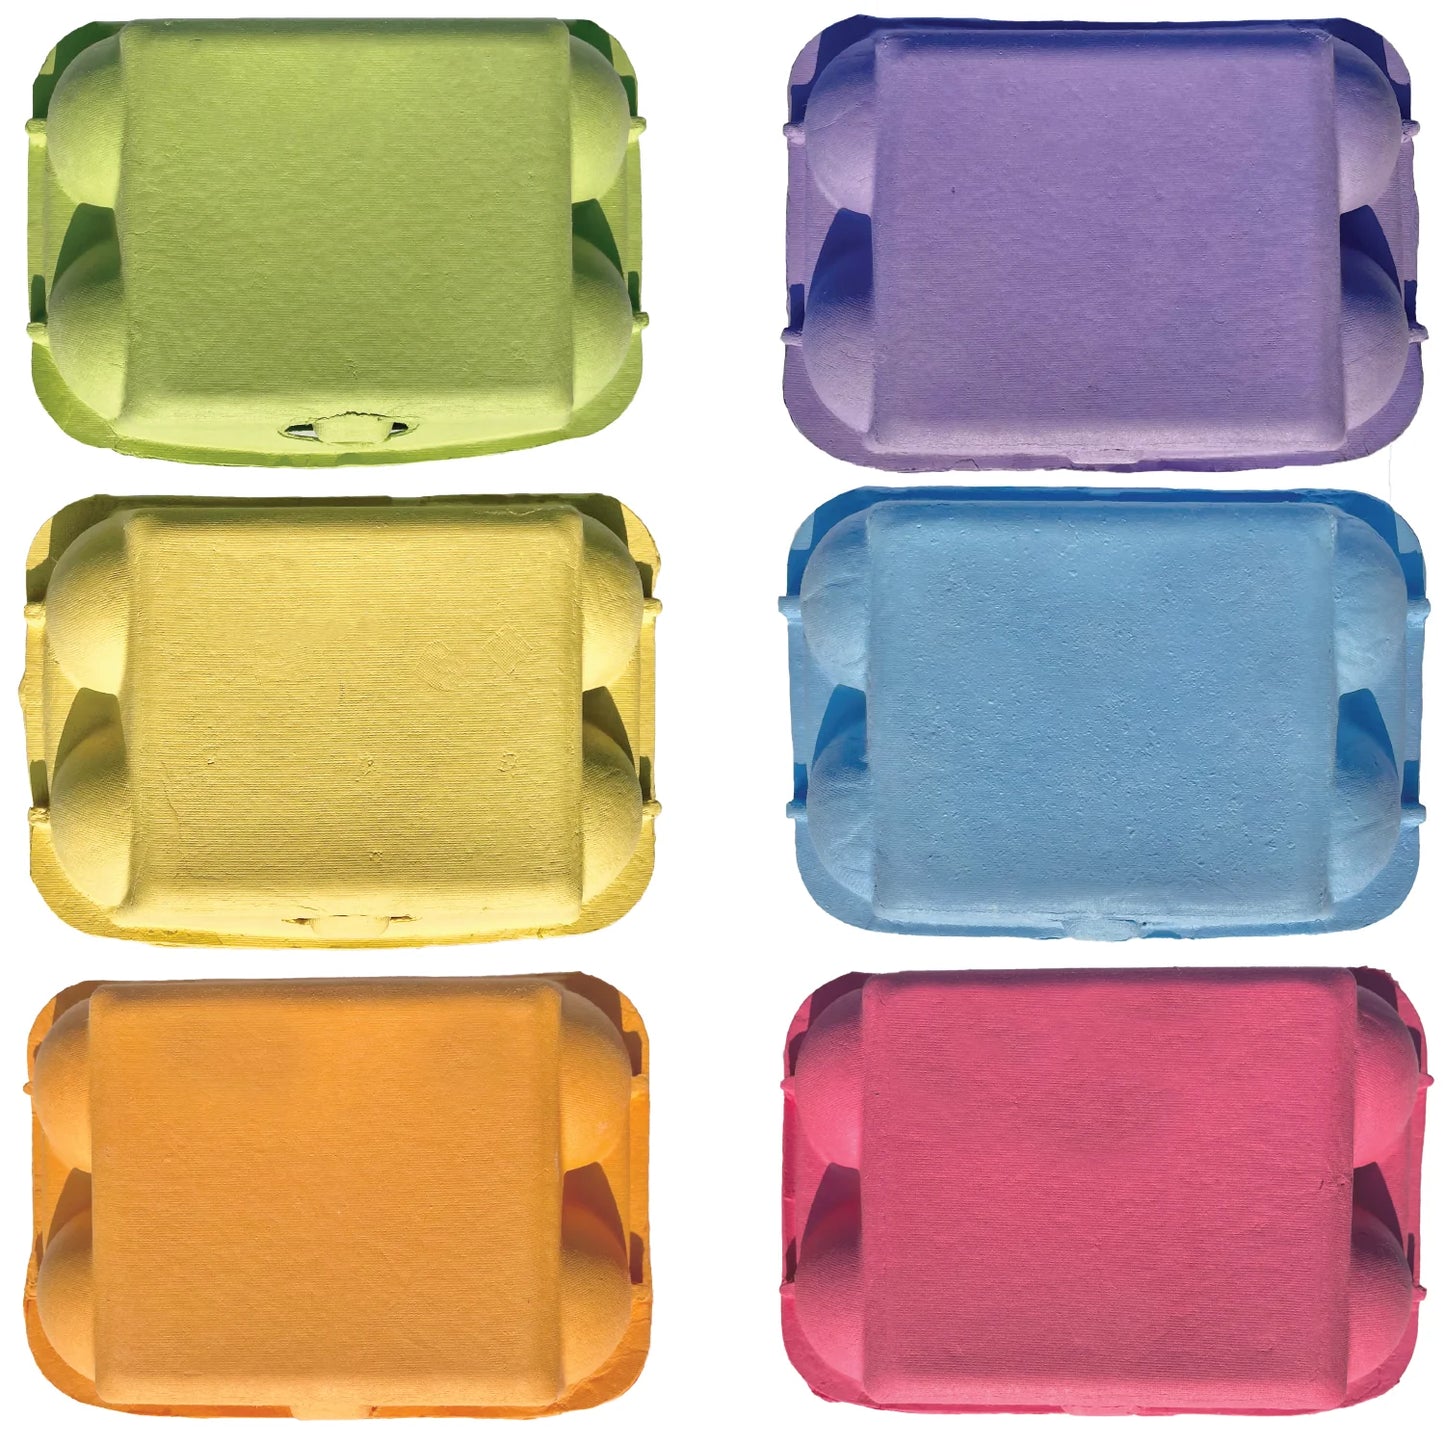 Multi-Colour Easter Egg Cartons